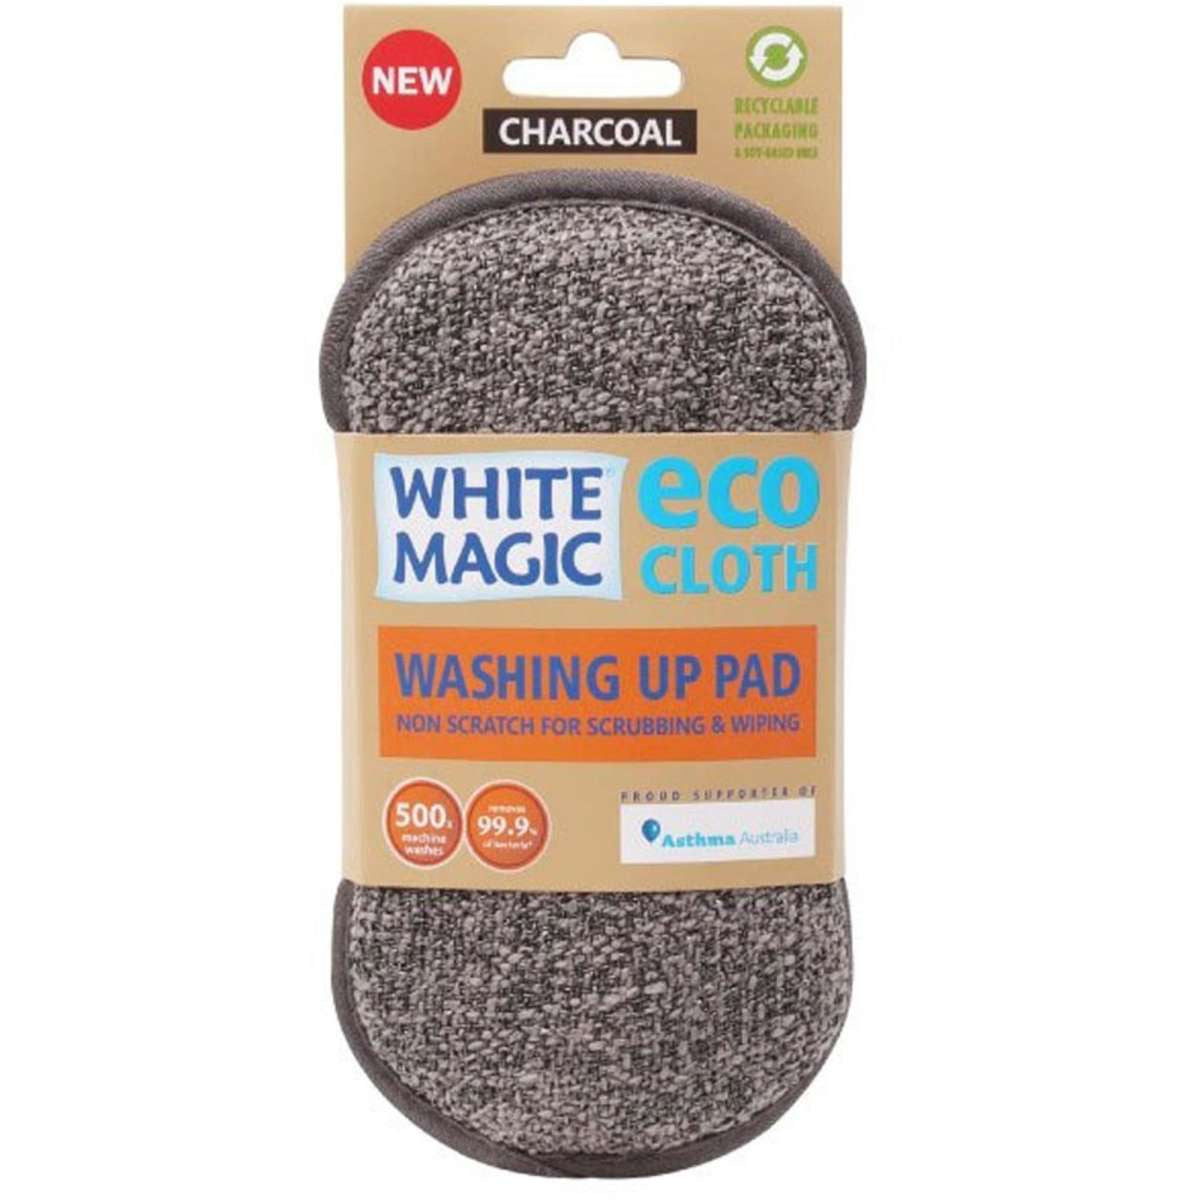 White Magic Eco Cloth Washing Up Pad Charcoal